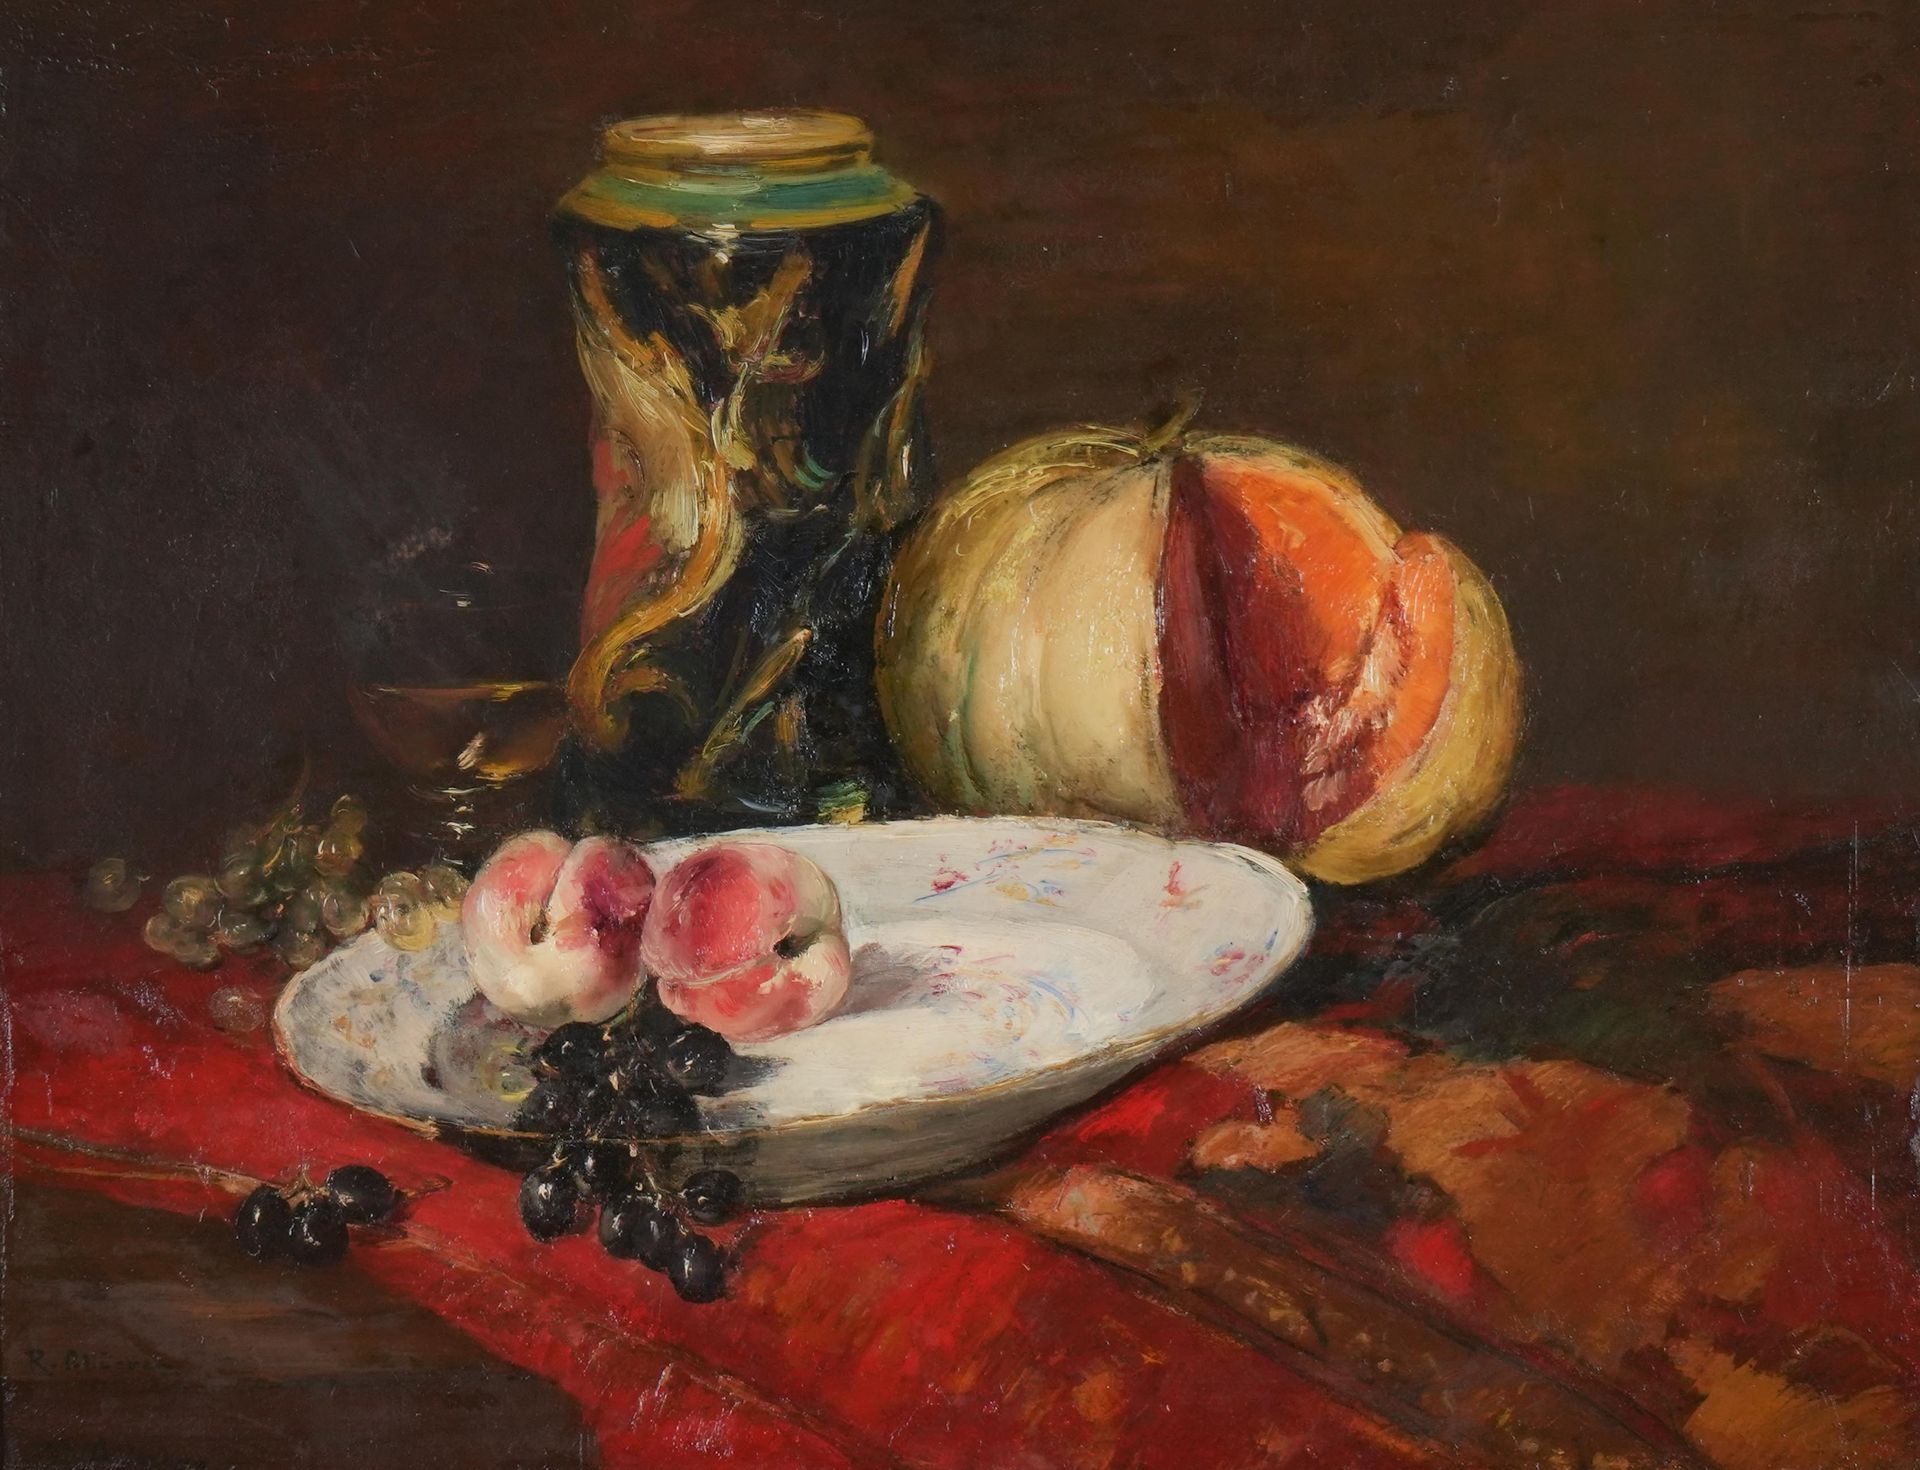 Null 雷蒙-阿尔勒格 (1857-1933)
静物与甜瓜
板面油画
左下方有签名
50 x 65 cm